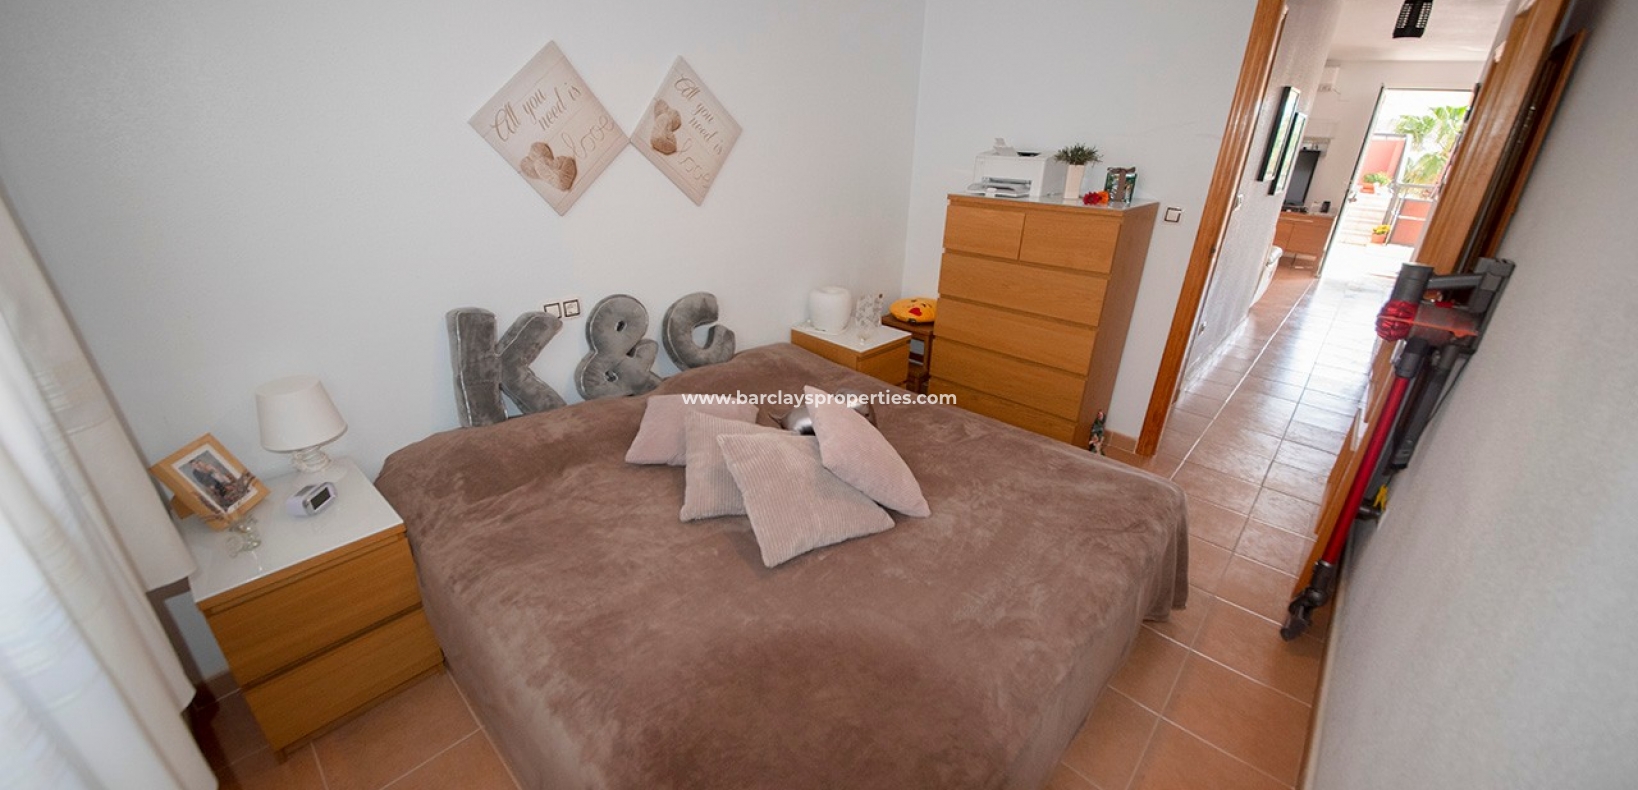 Herenhuis stijl woning te koop in La Marina Alicante Spanje - slaapkamer